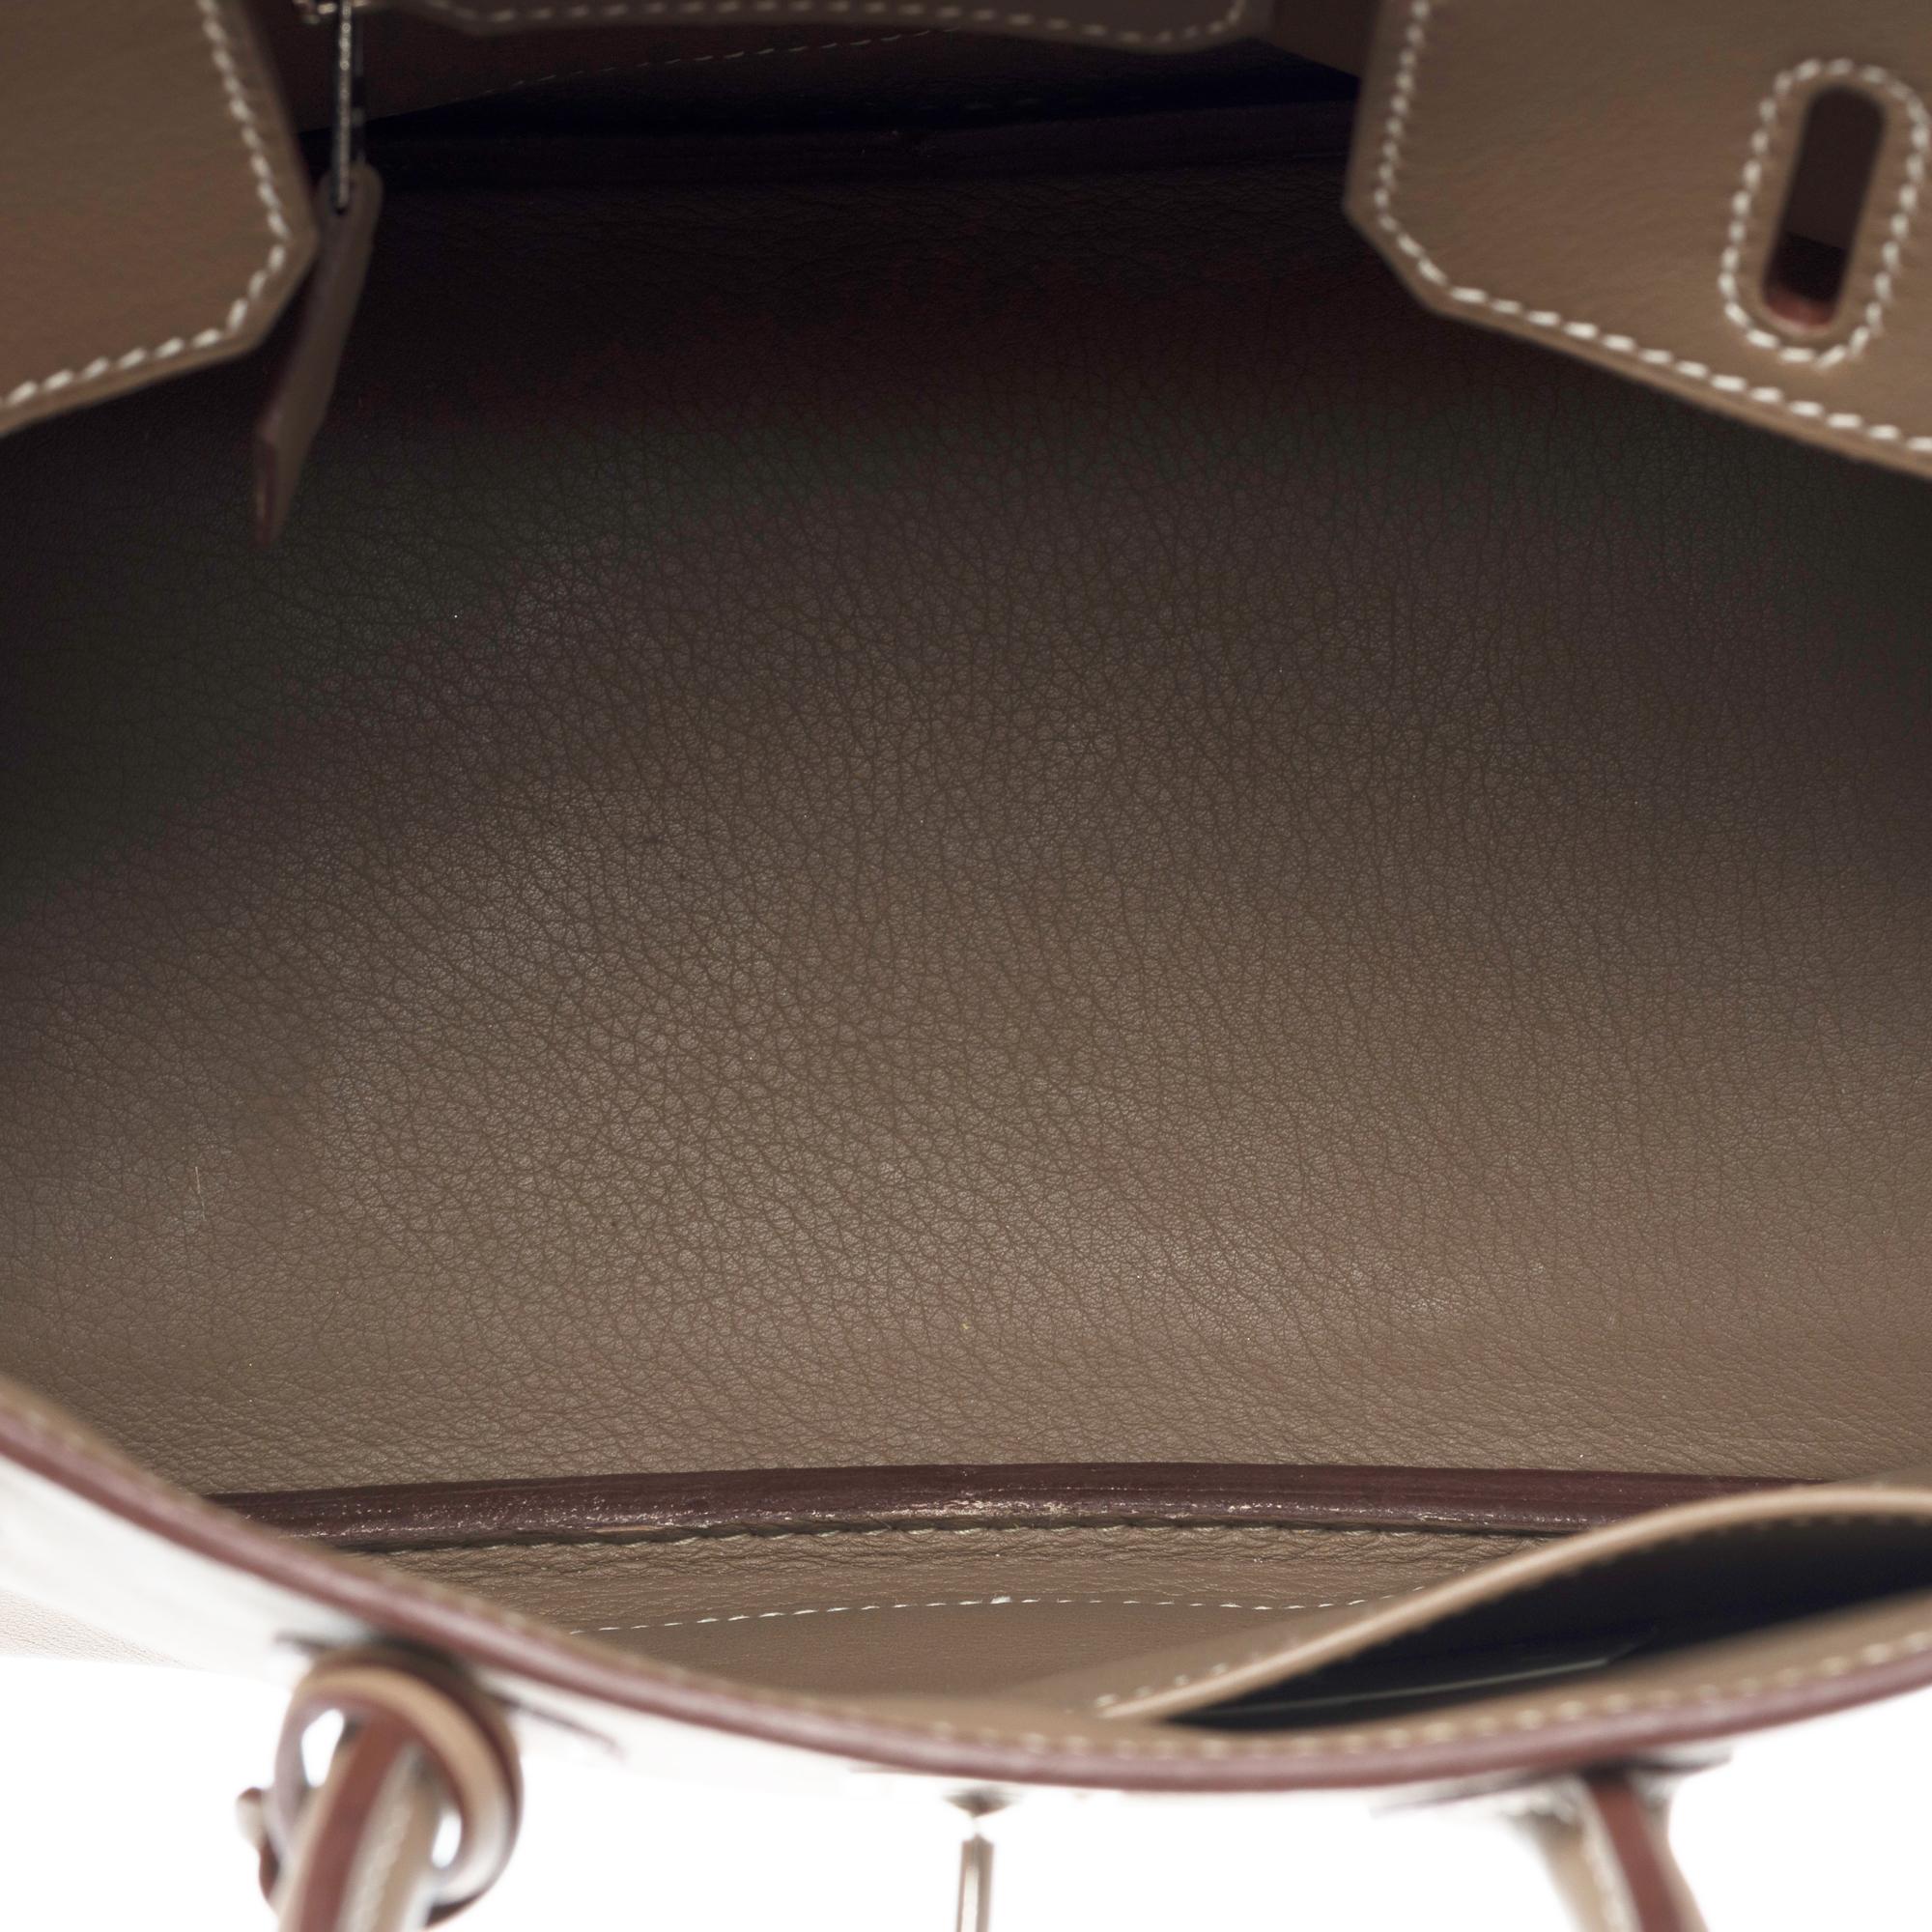 Amazing Hermes Birkin 25cm handbag in Etoupe Swift Calf leather, SHW 5